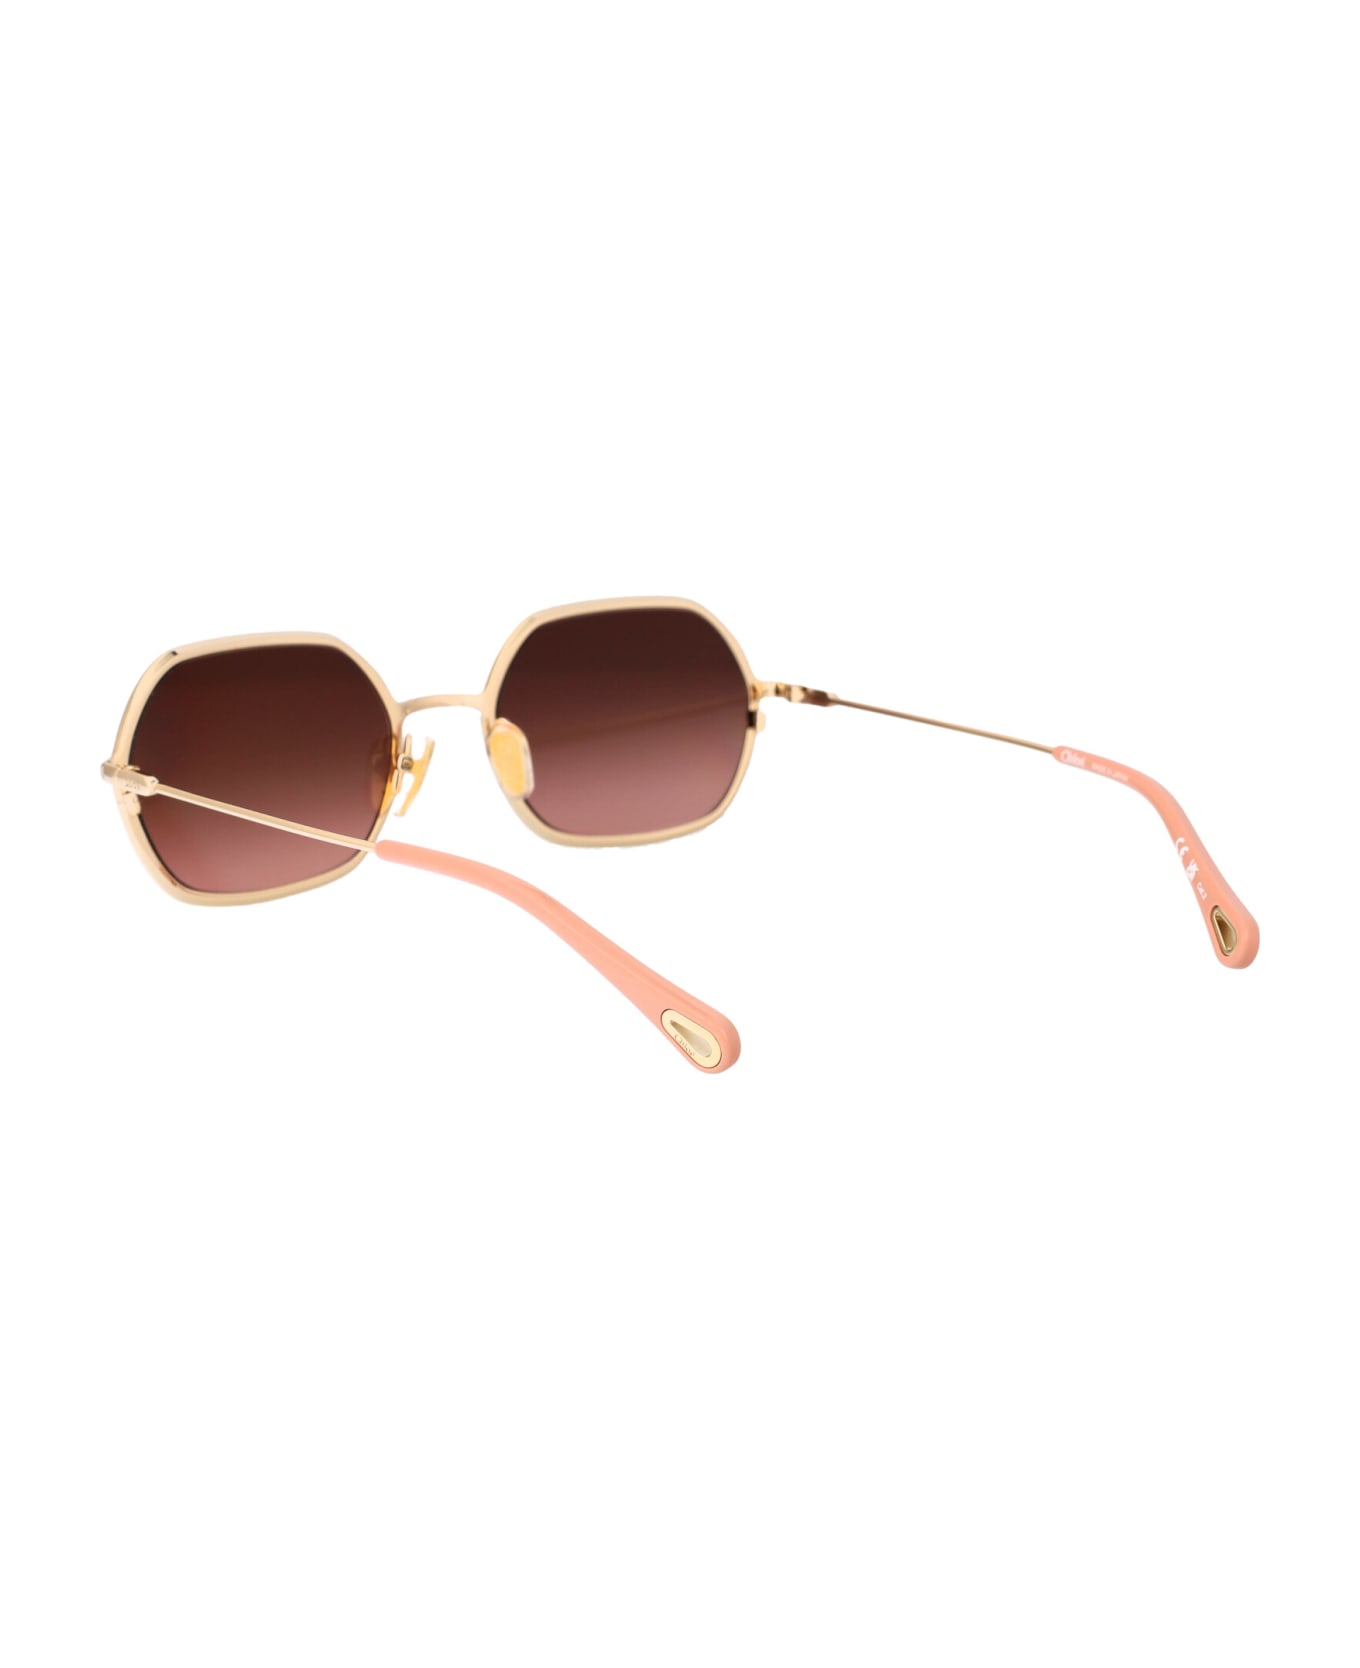 Chloé Eyewear Ch0231s Sunglasses - 002 GOLD GOLD COPPER サングラス